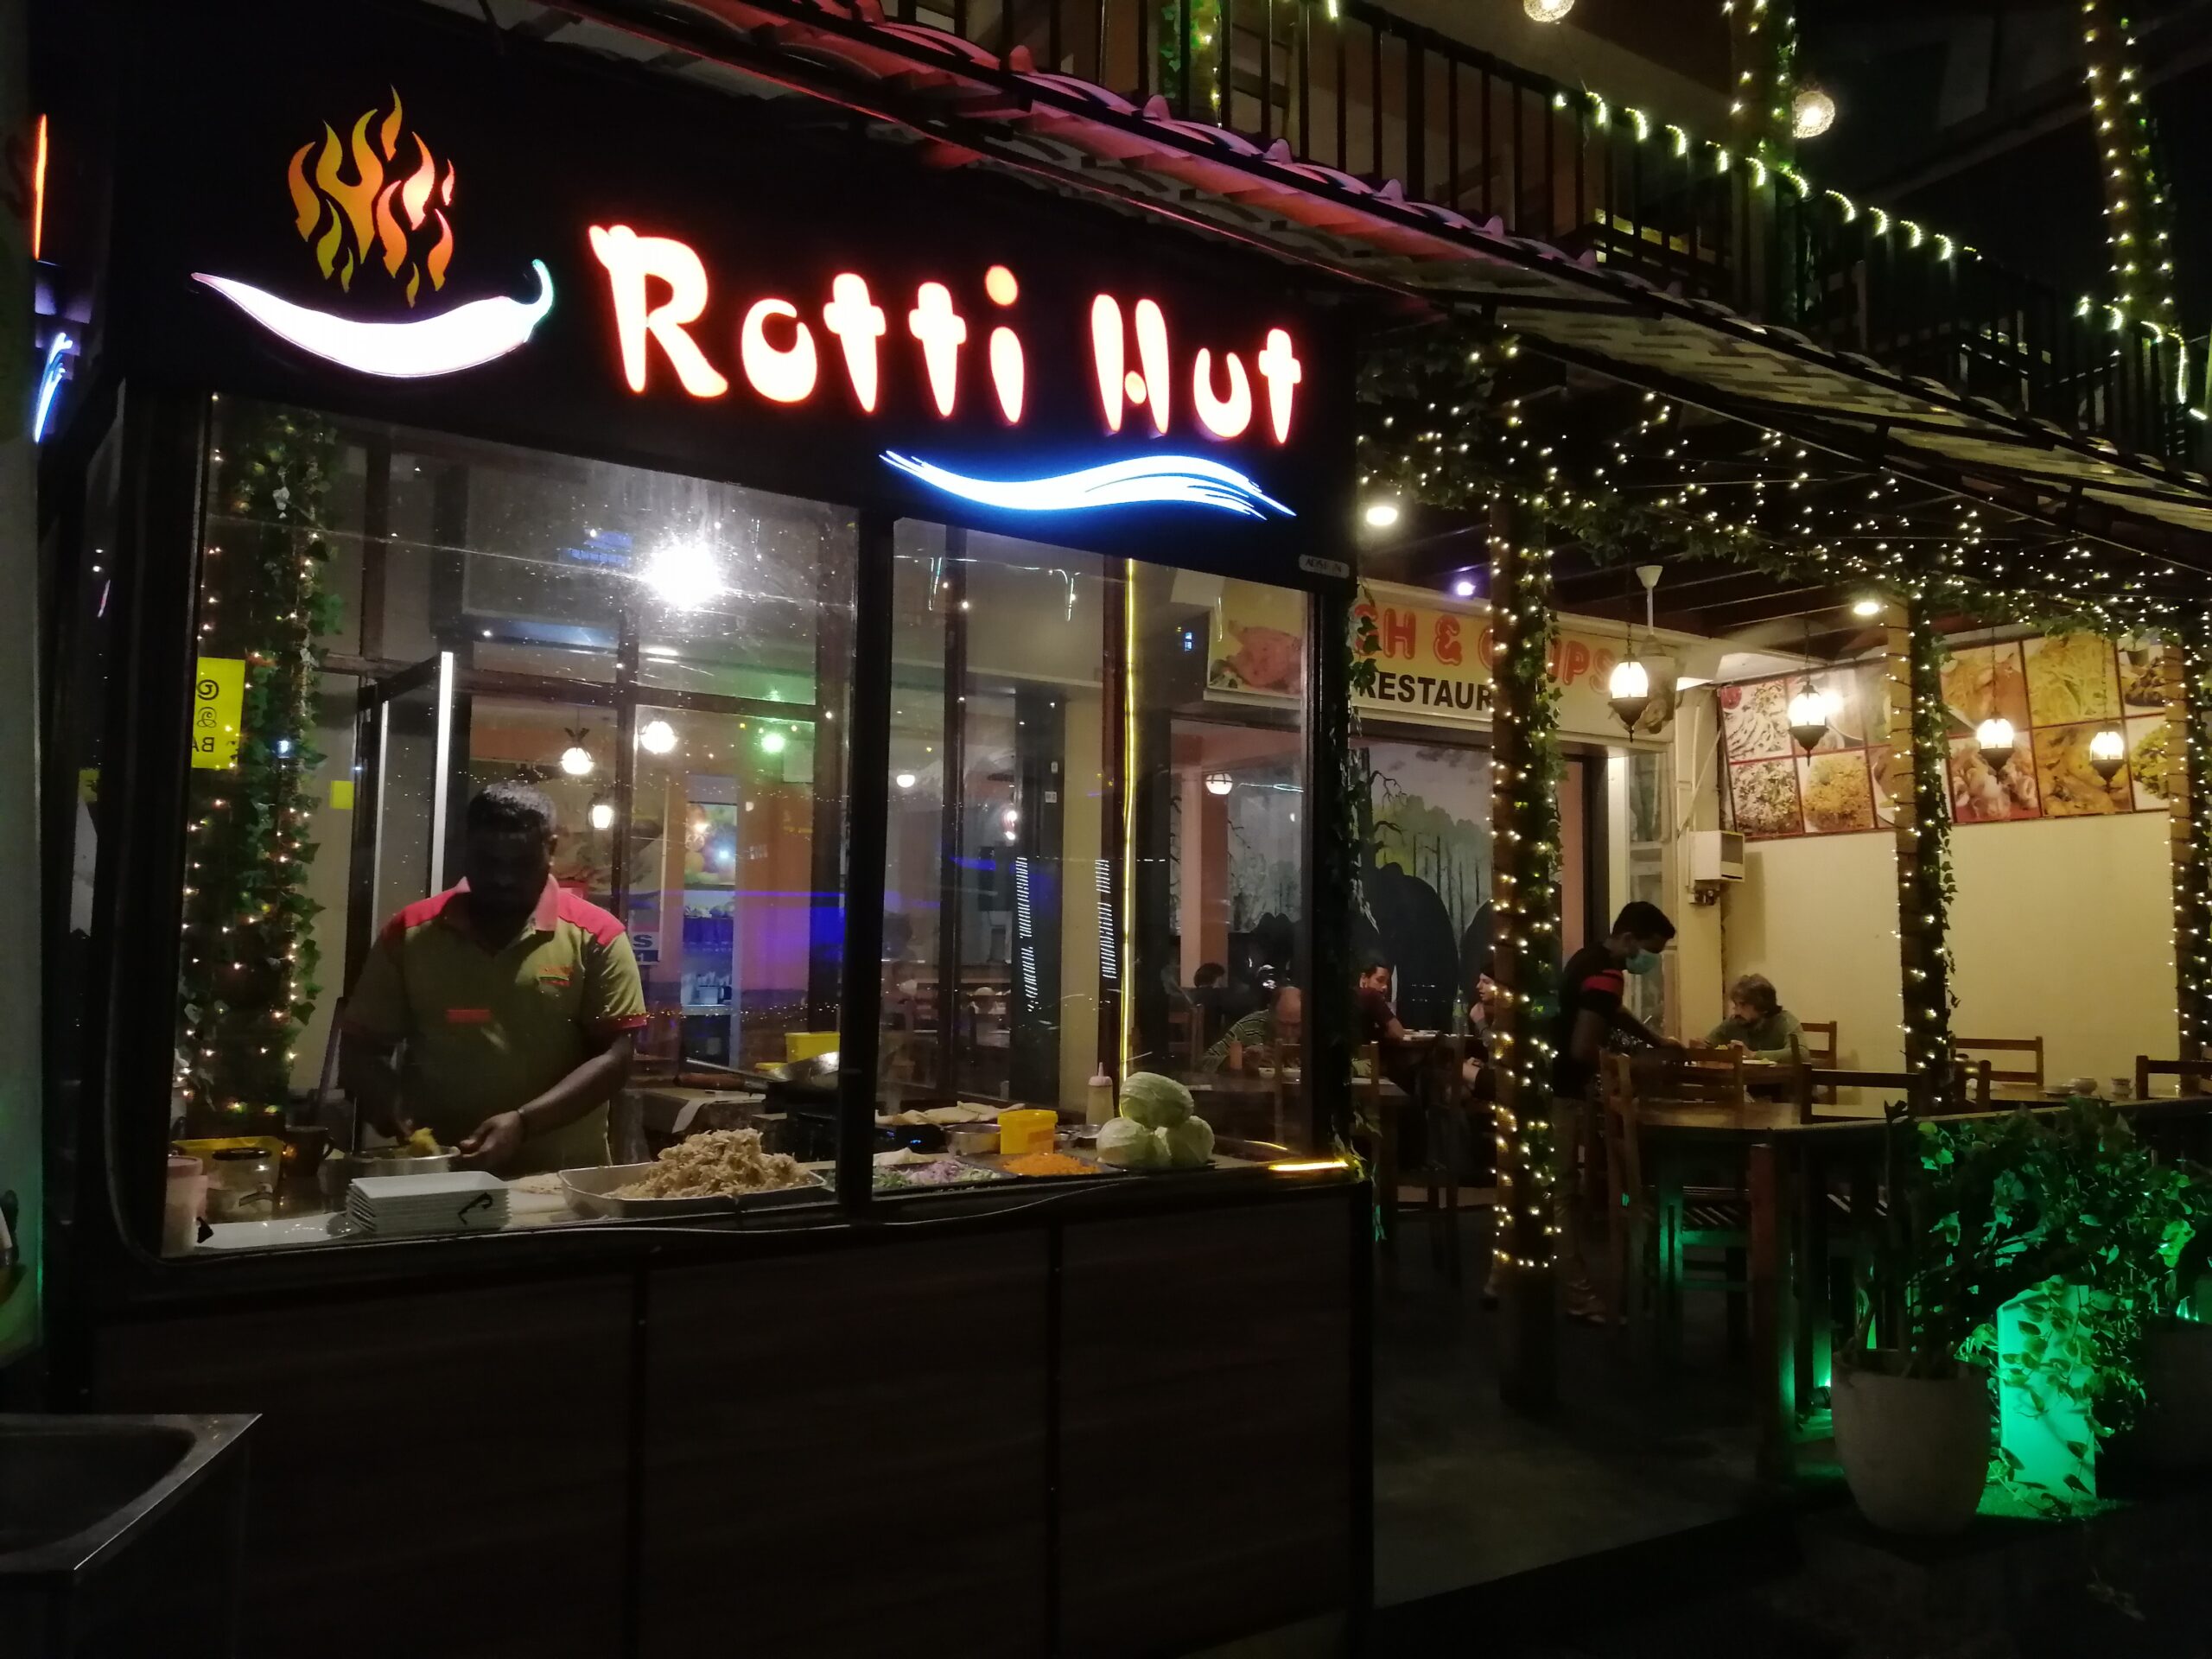 Ella Rotti Hut Restaurant - Restaurants In Ella, Sri Lanka 